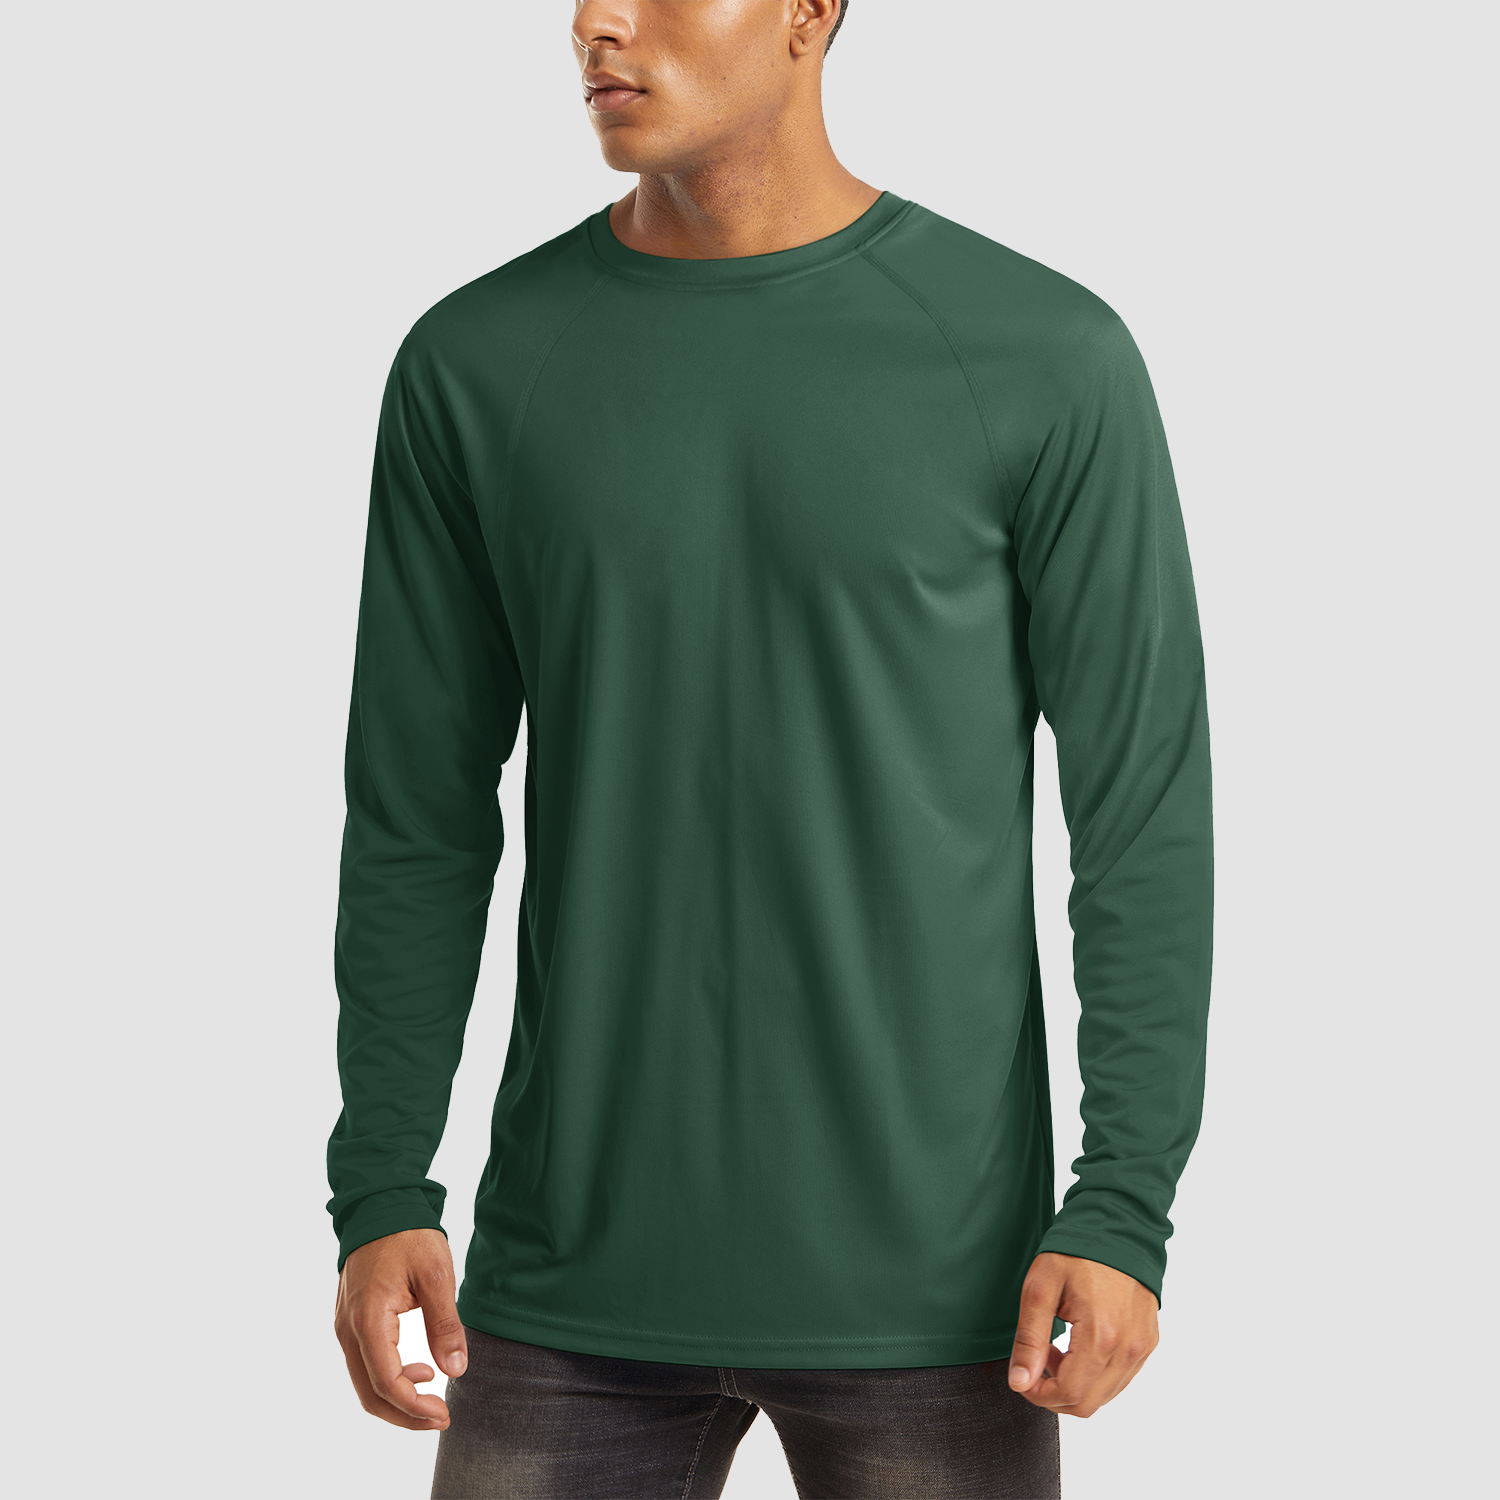 【Buy 4 Get 4th Free】Men's Long Sleeve Hooded Shirt UPF 50+ Athletic Shirt, Blue Grey / XXL